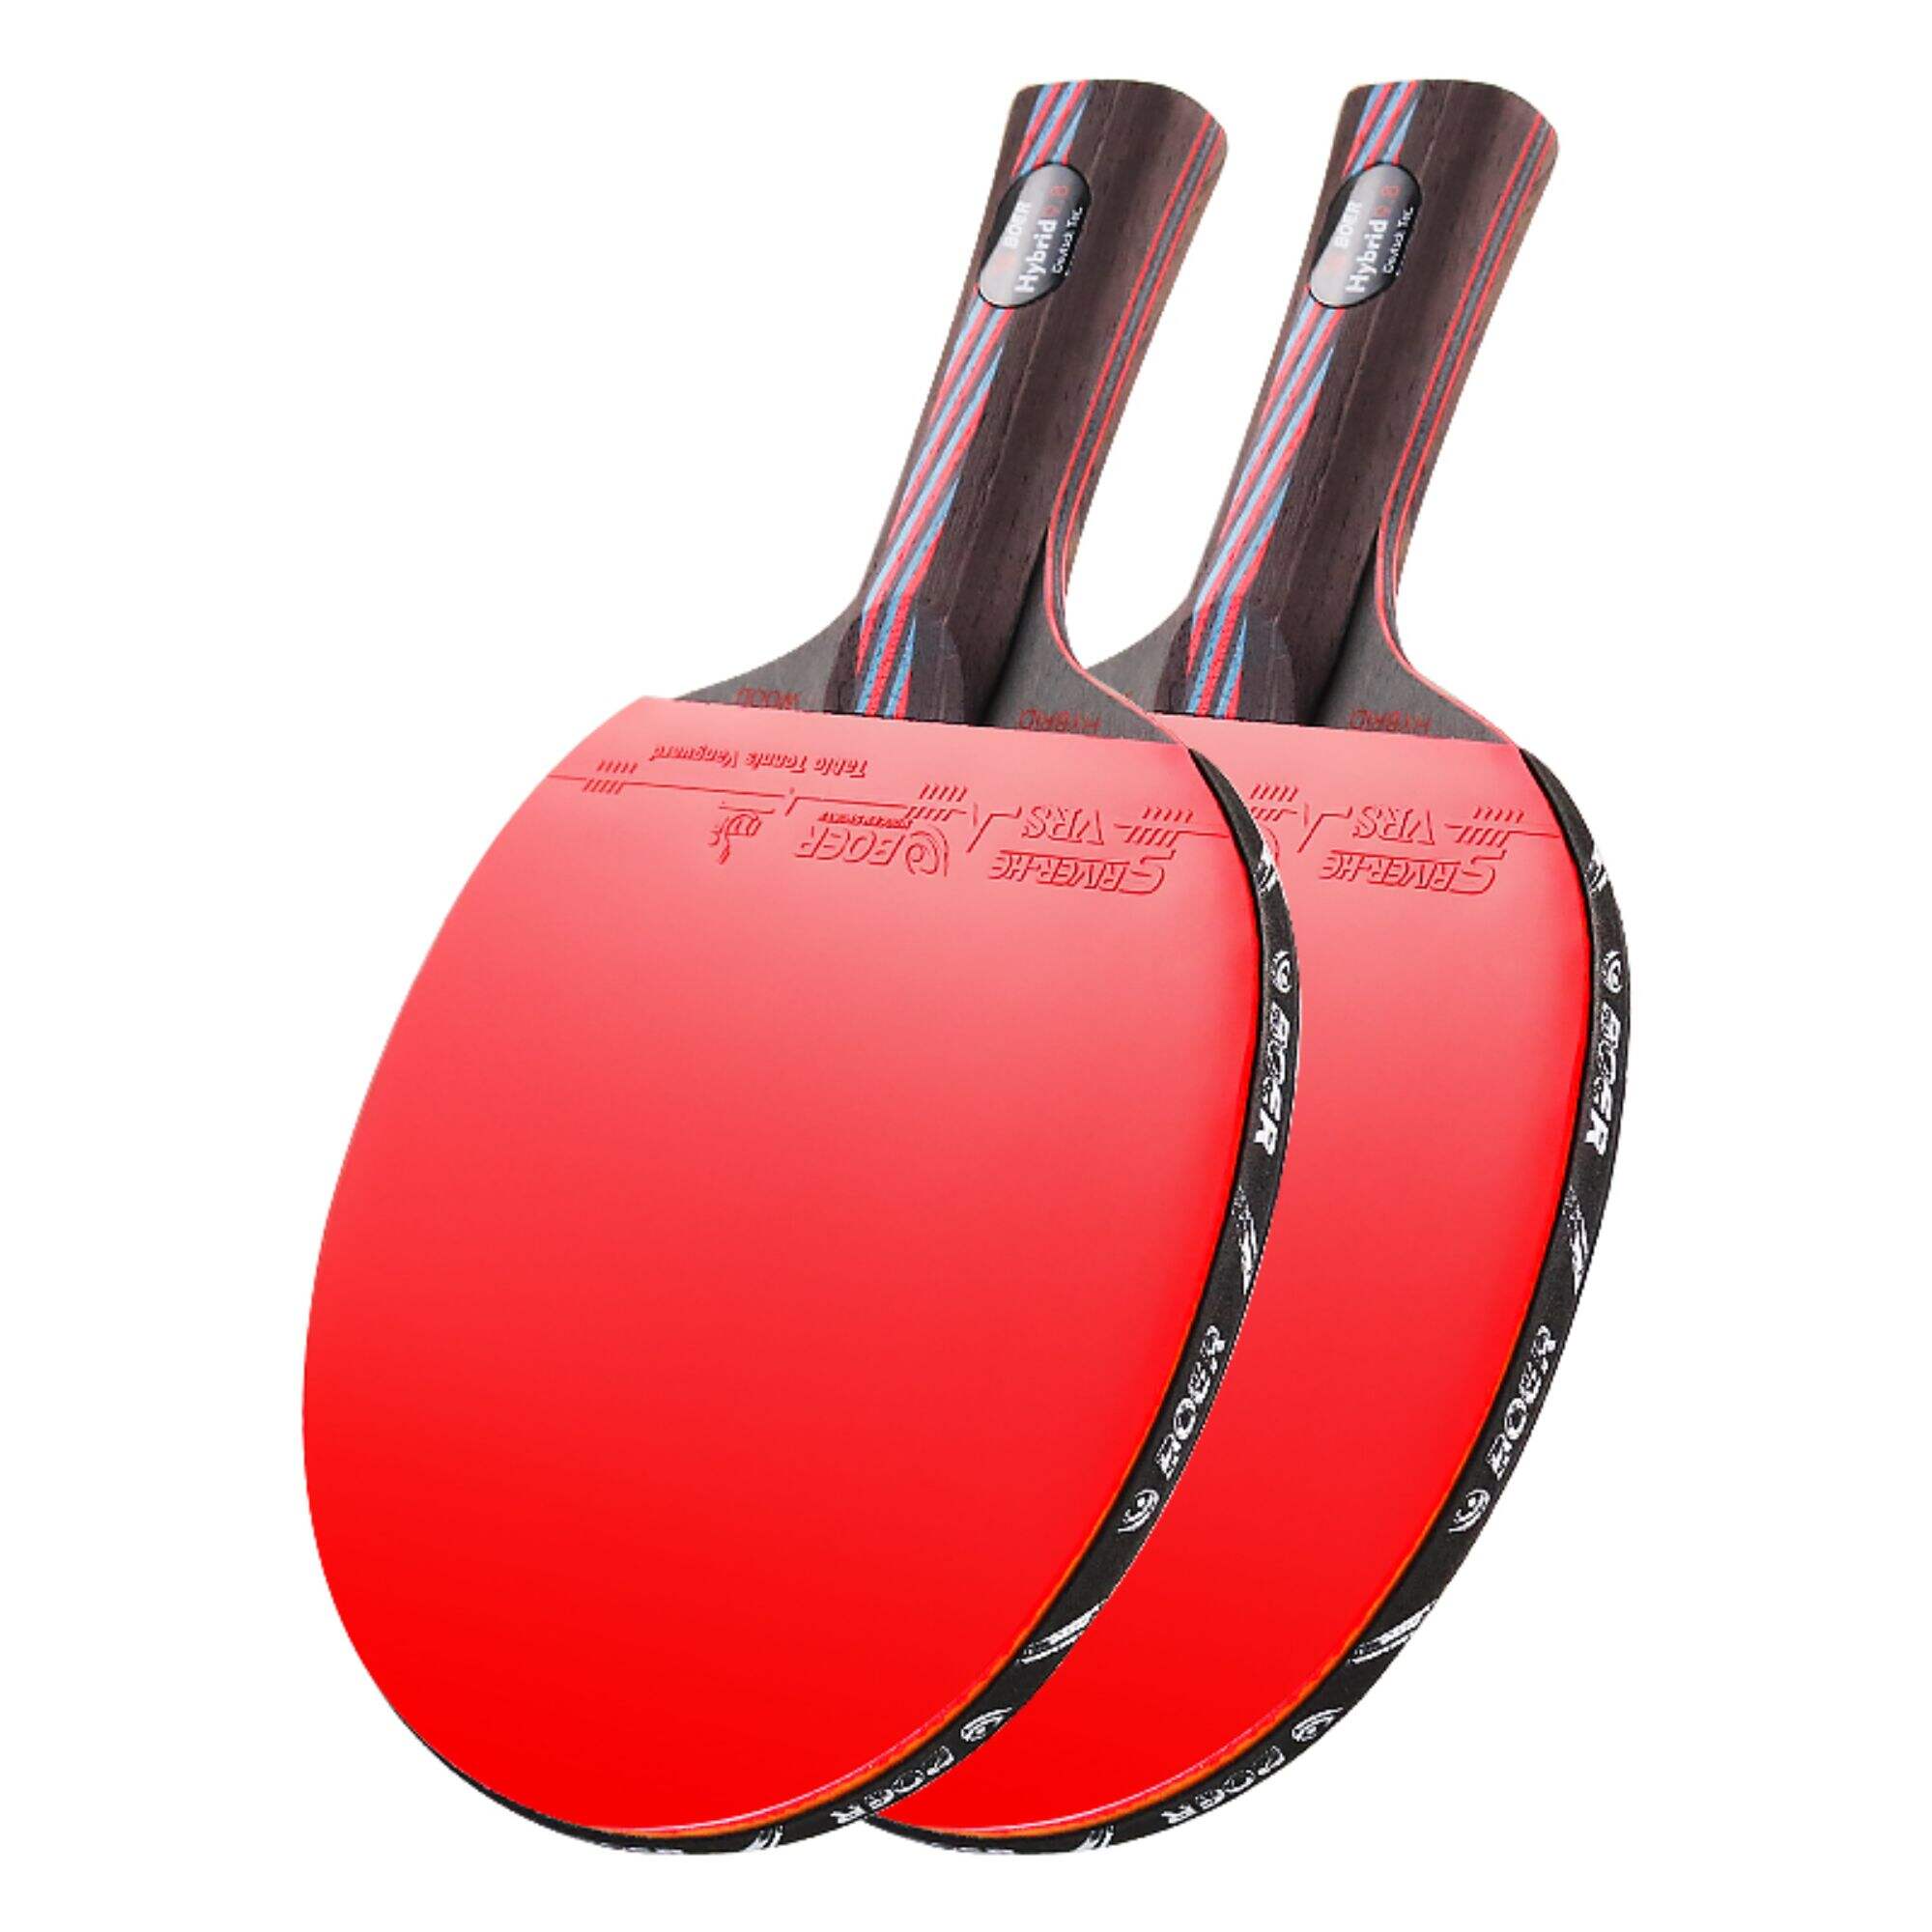 Boer S6-HE Series High-grade Table Tennis Rakcet/Bat/Paddle